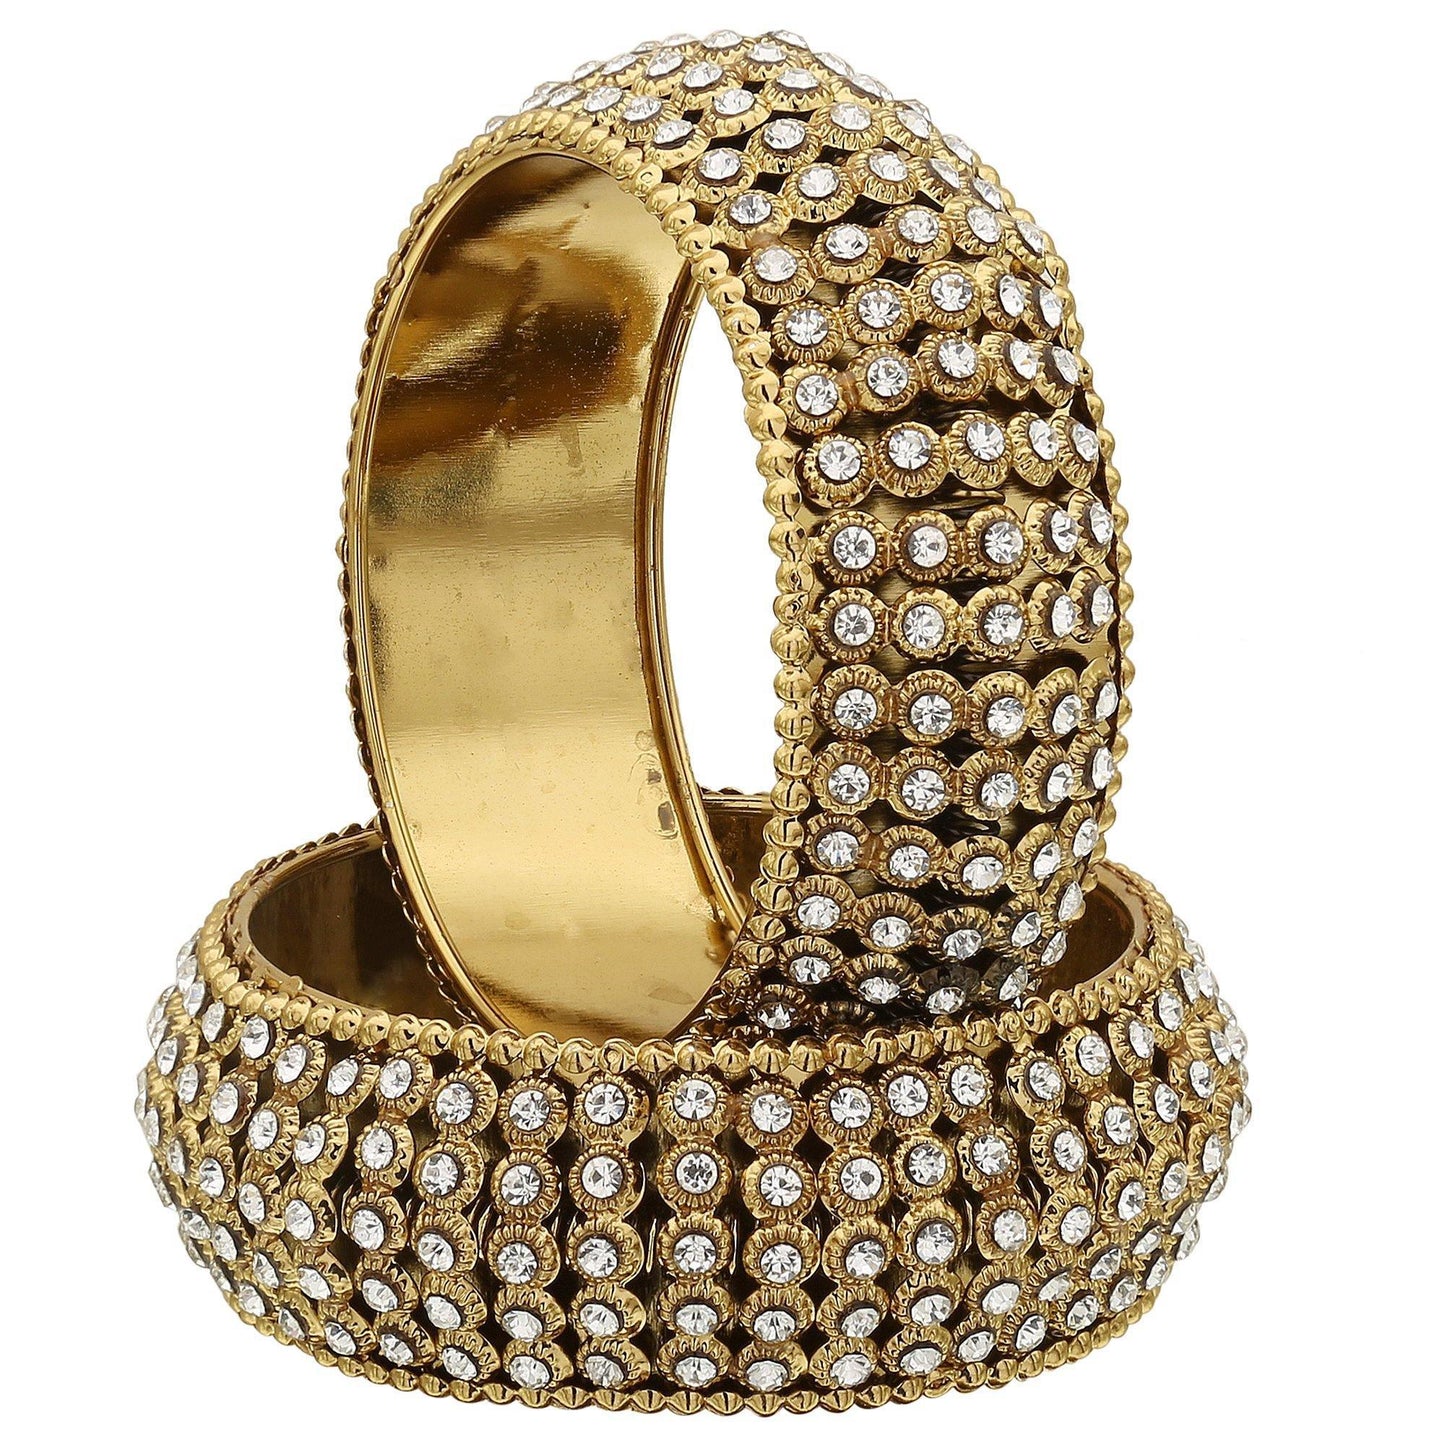 sukriti indian traditional royal gold tone kundan bracelet bangles for girls & women - set of 2